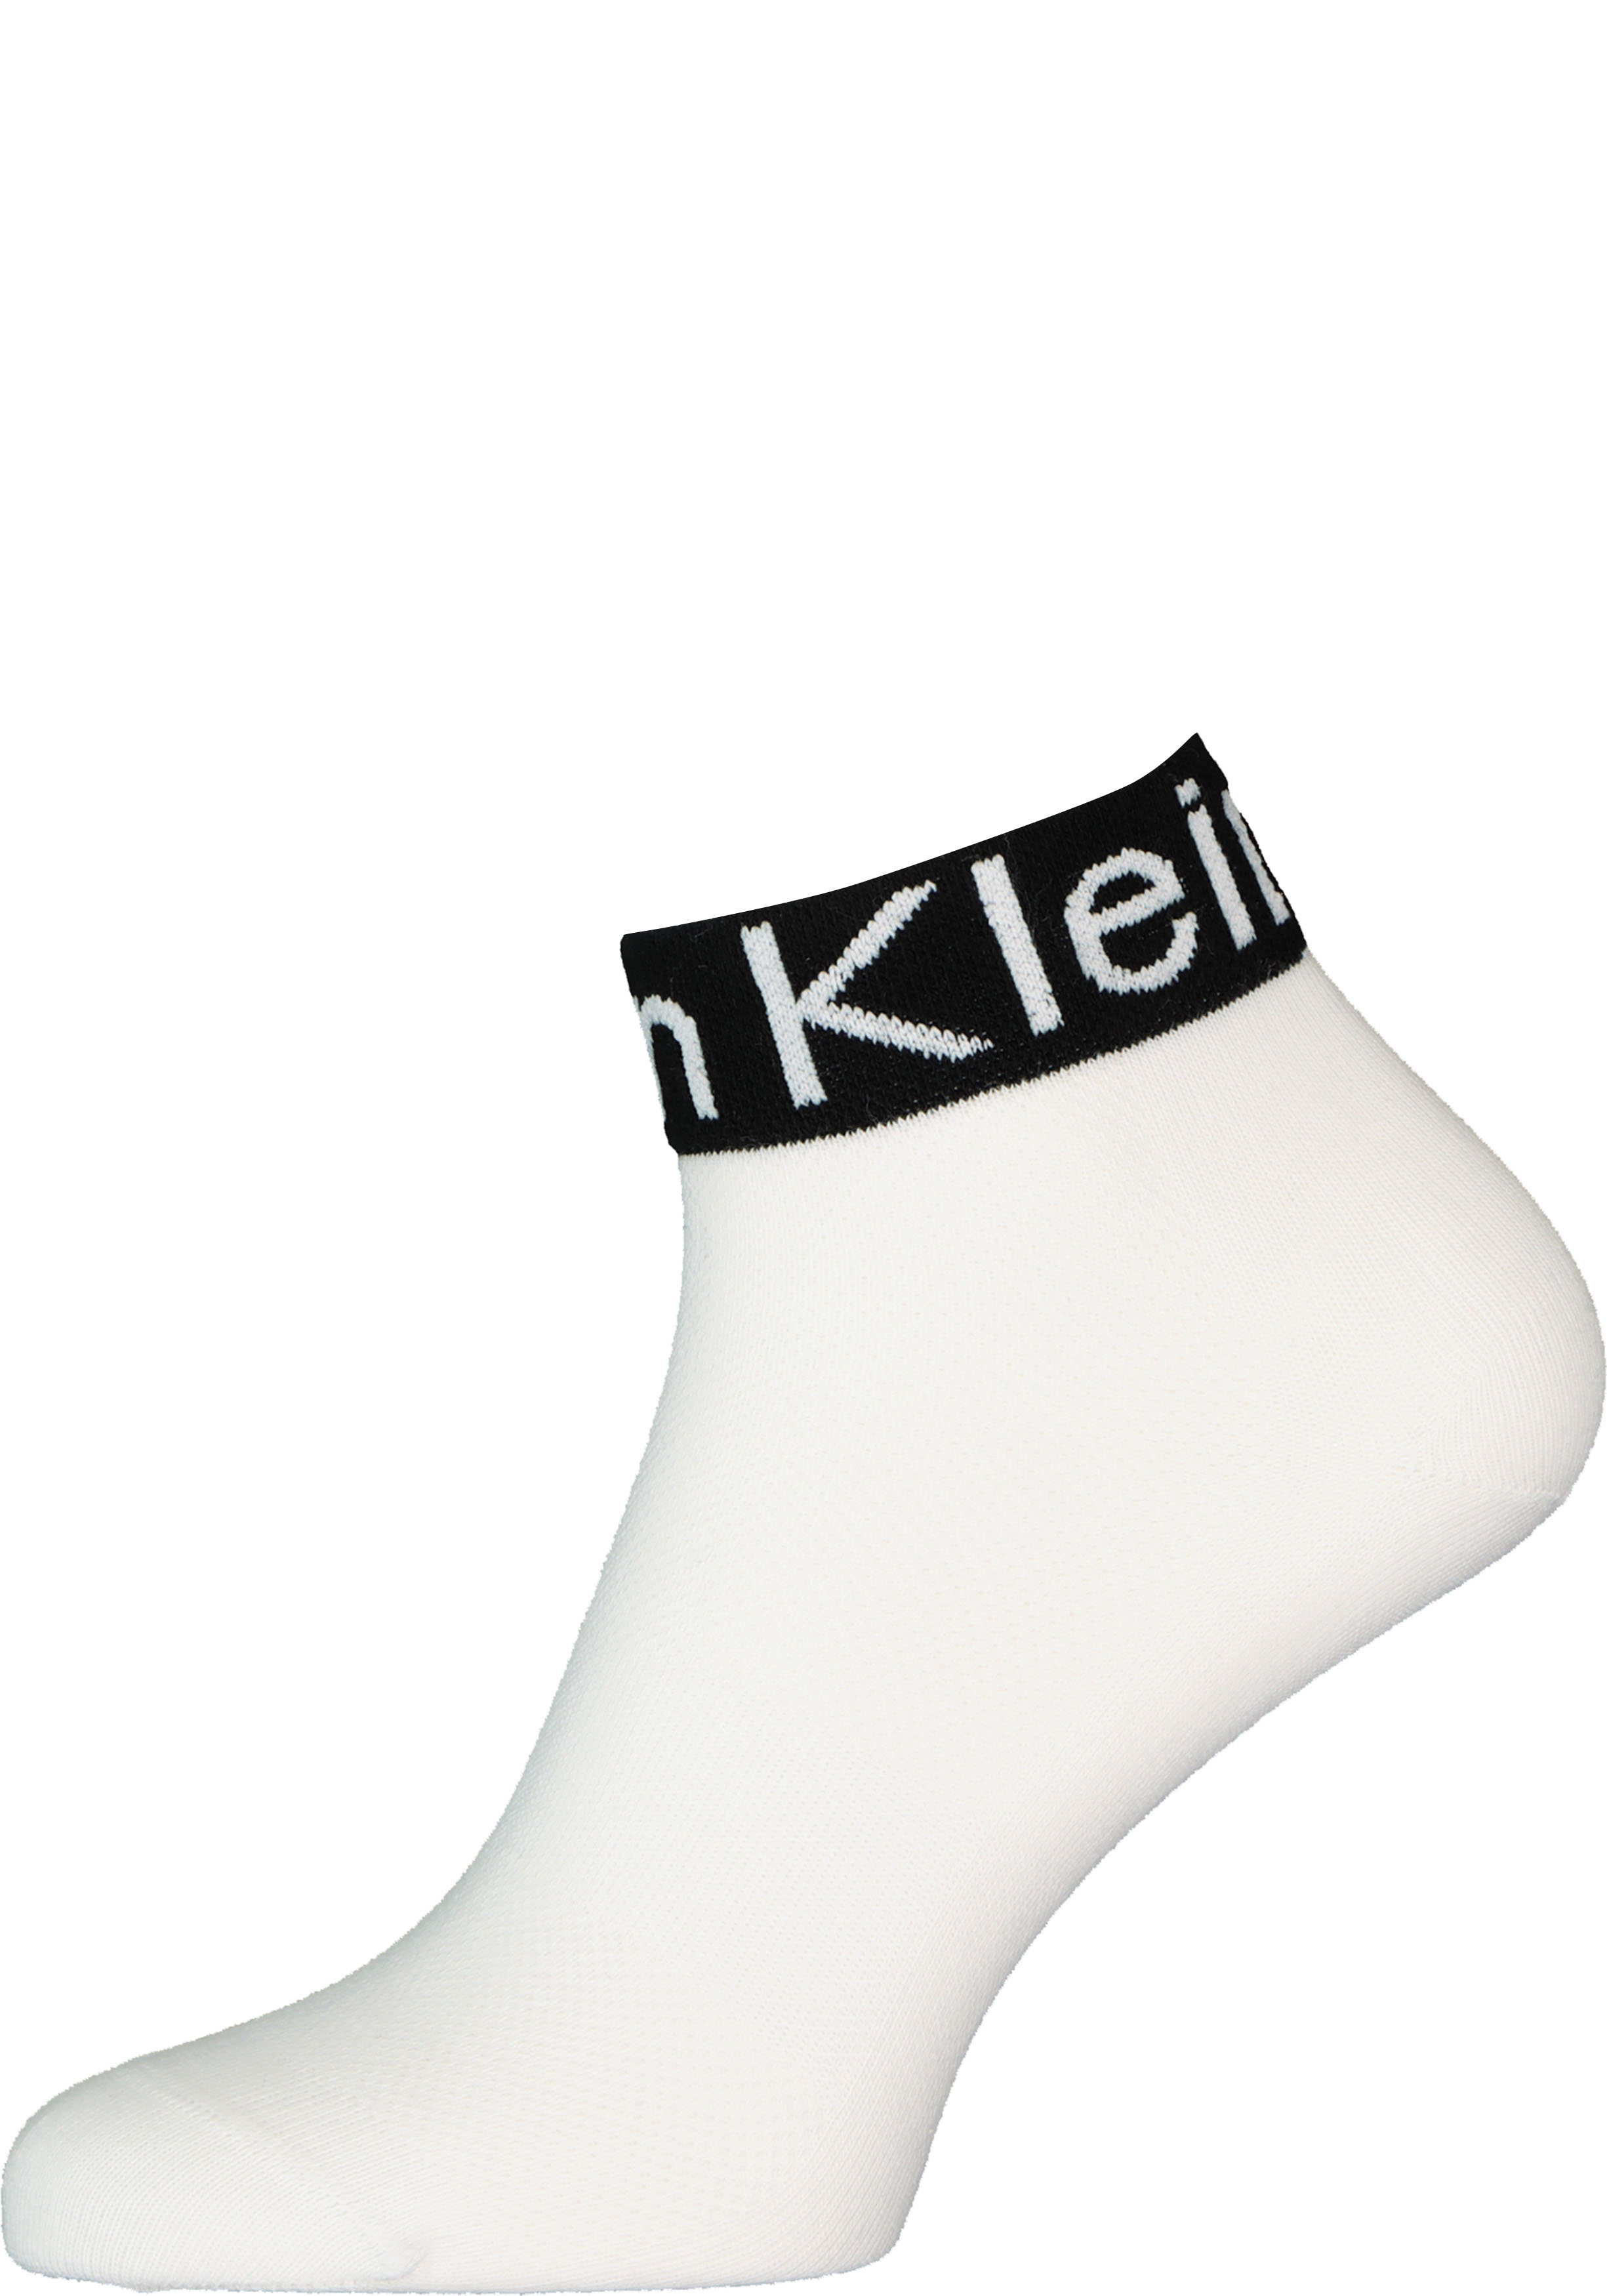 Calvin Klein damessokken Kayla (1-pack), lage logo sokken, wit met zwart